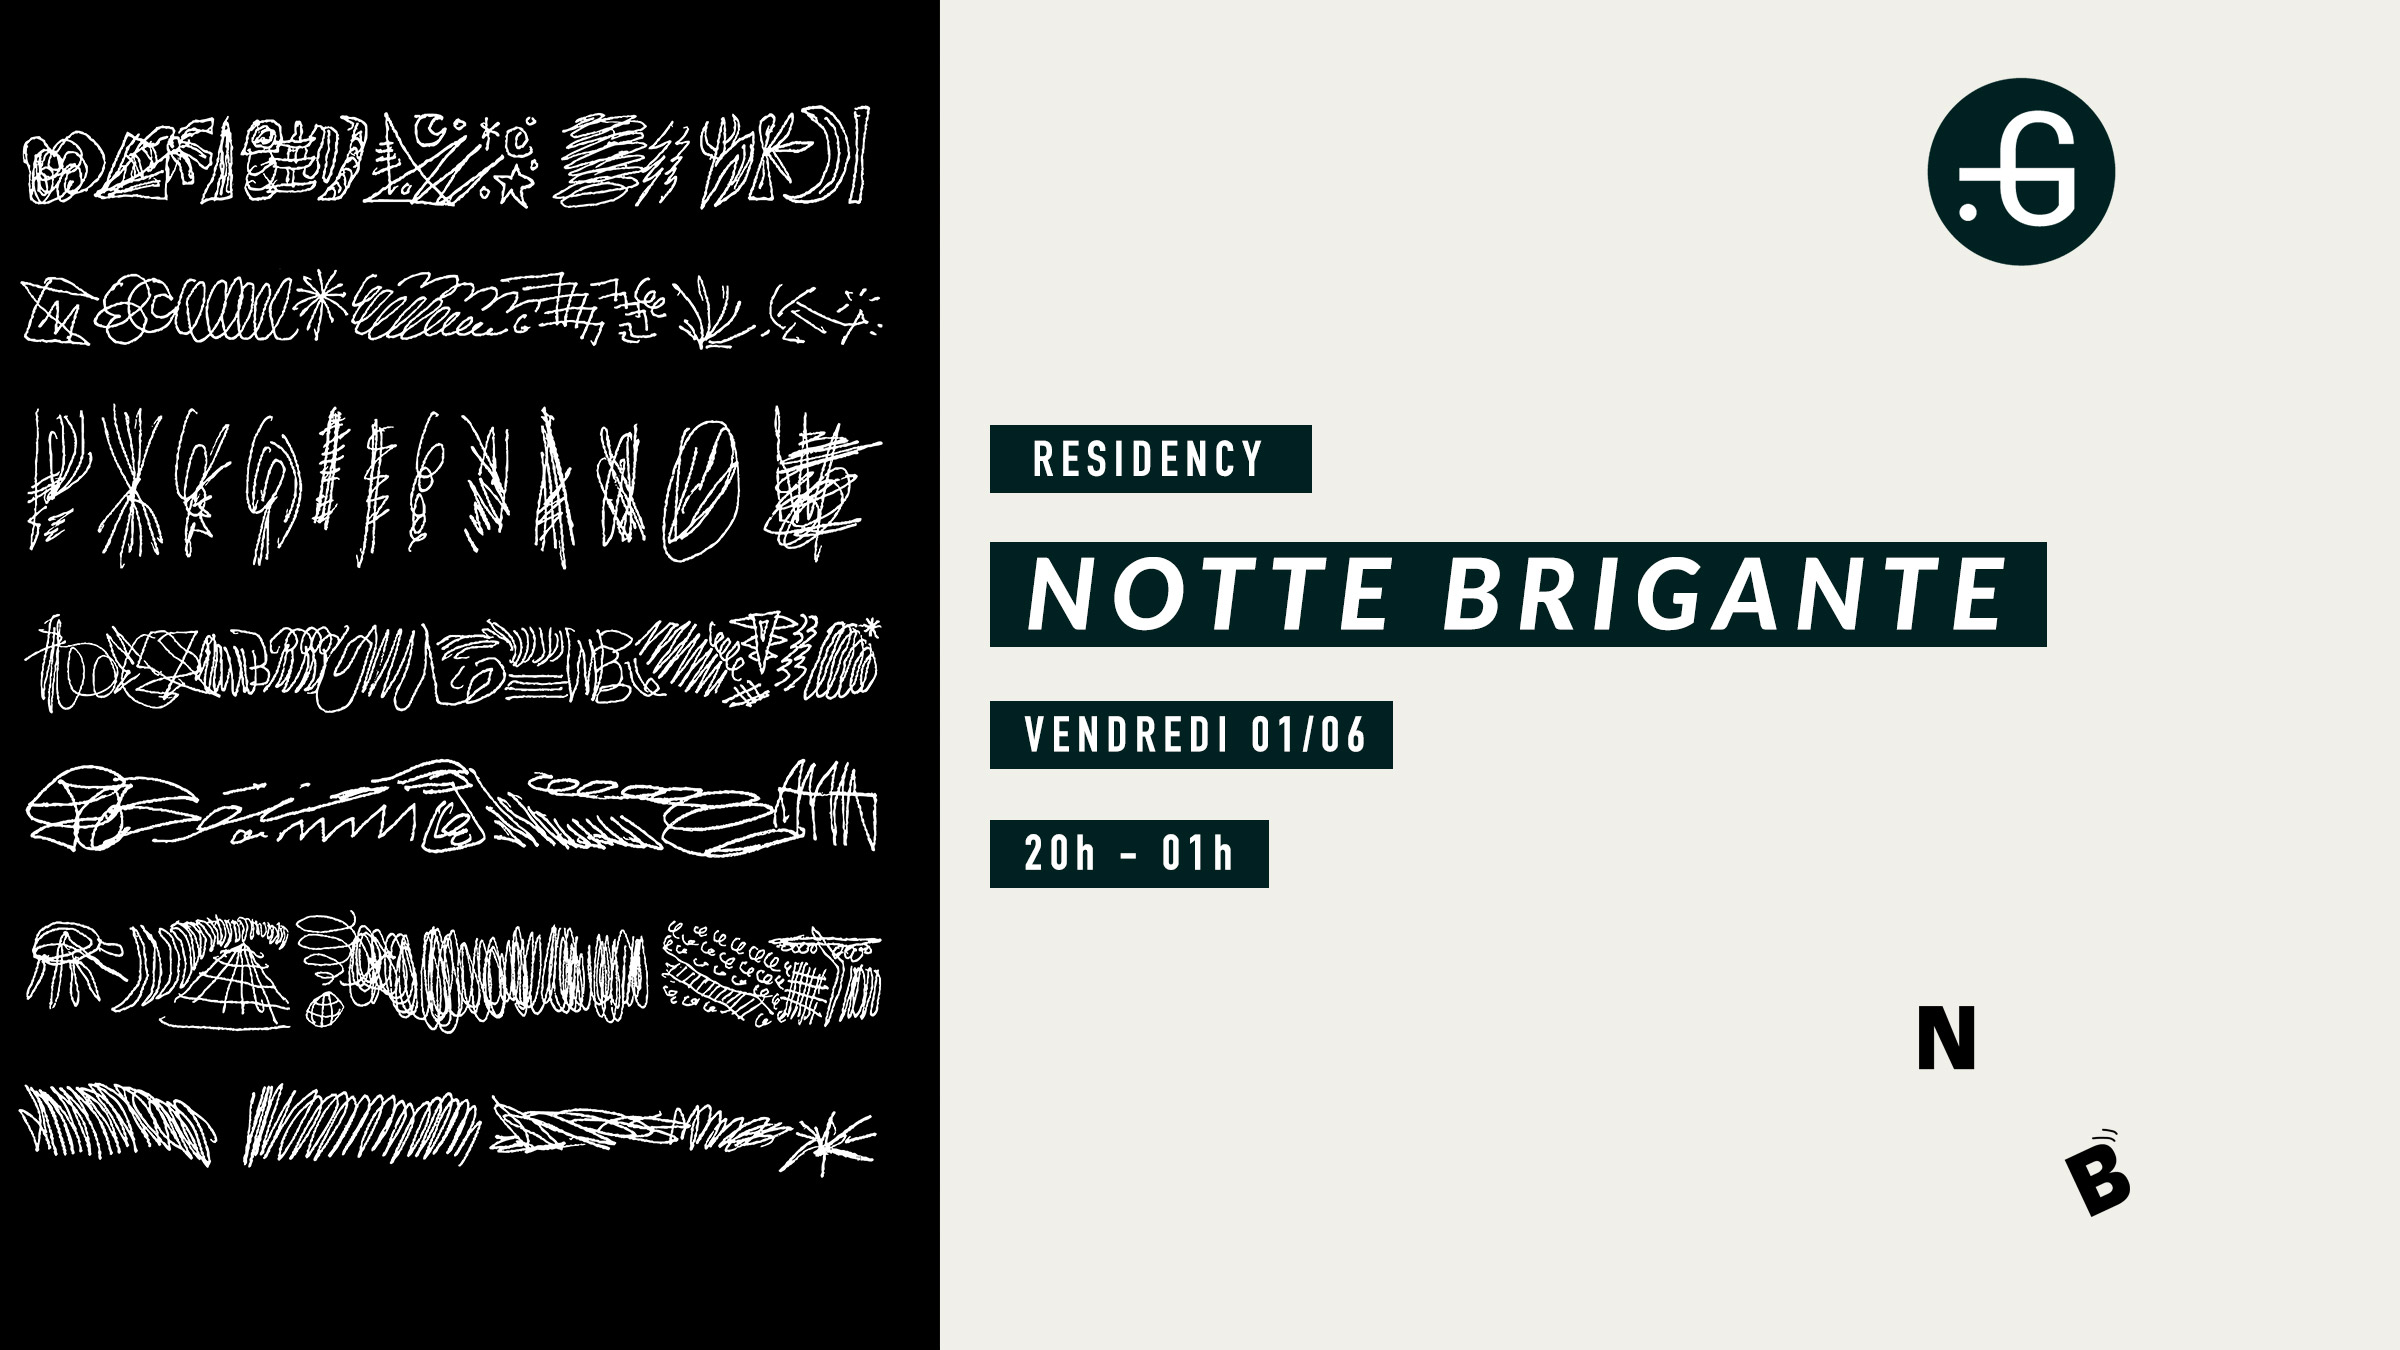 Notte Brigante Residency, 01/06